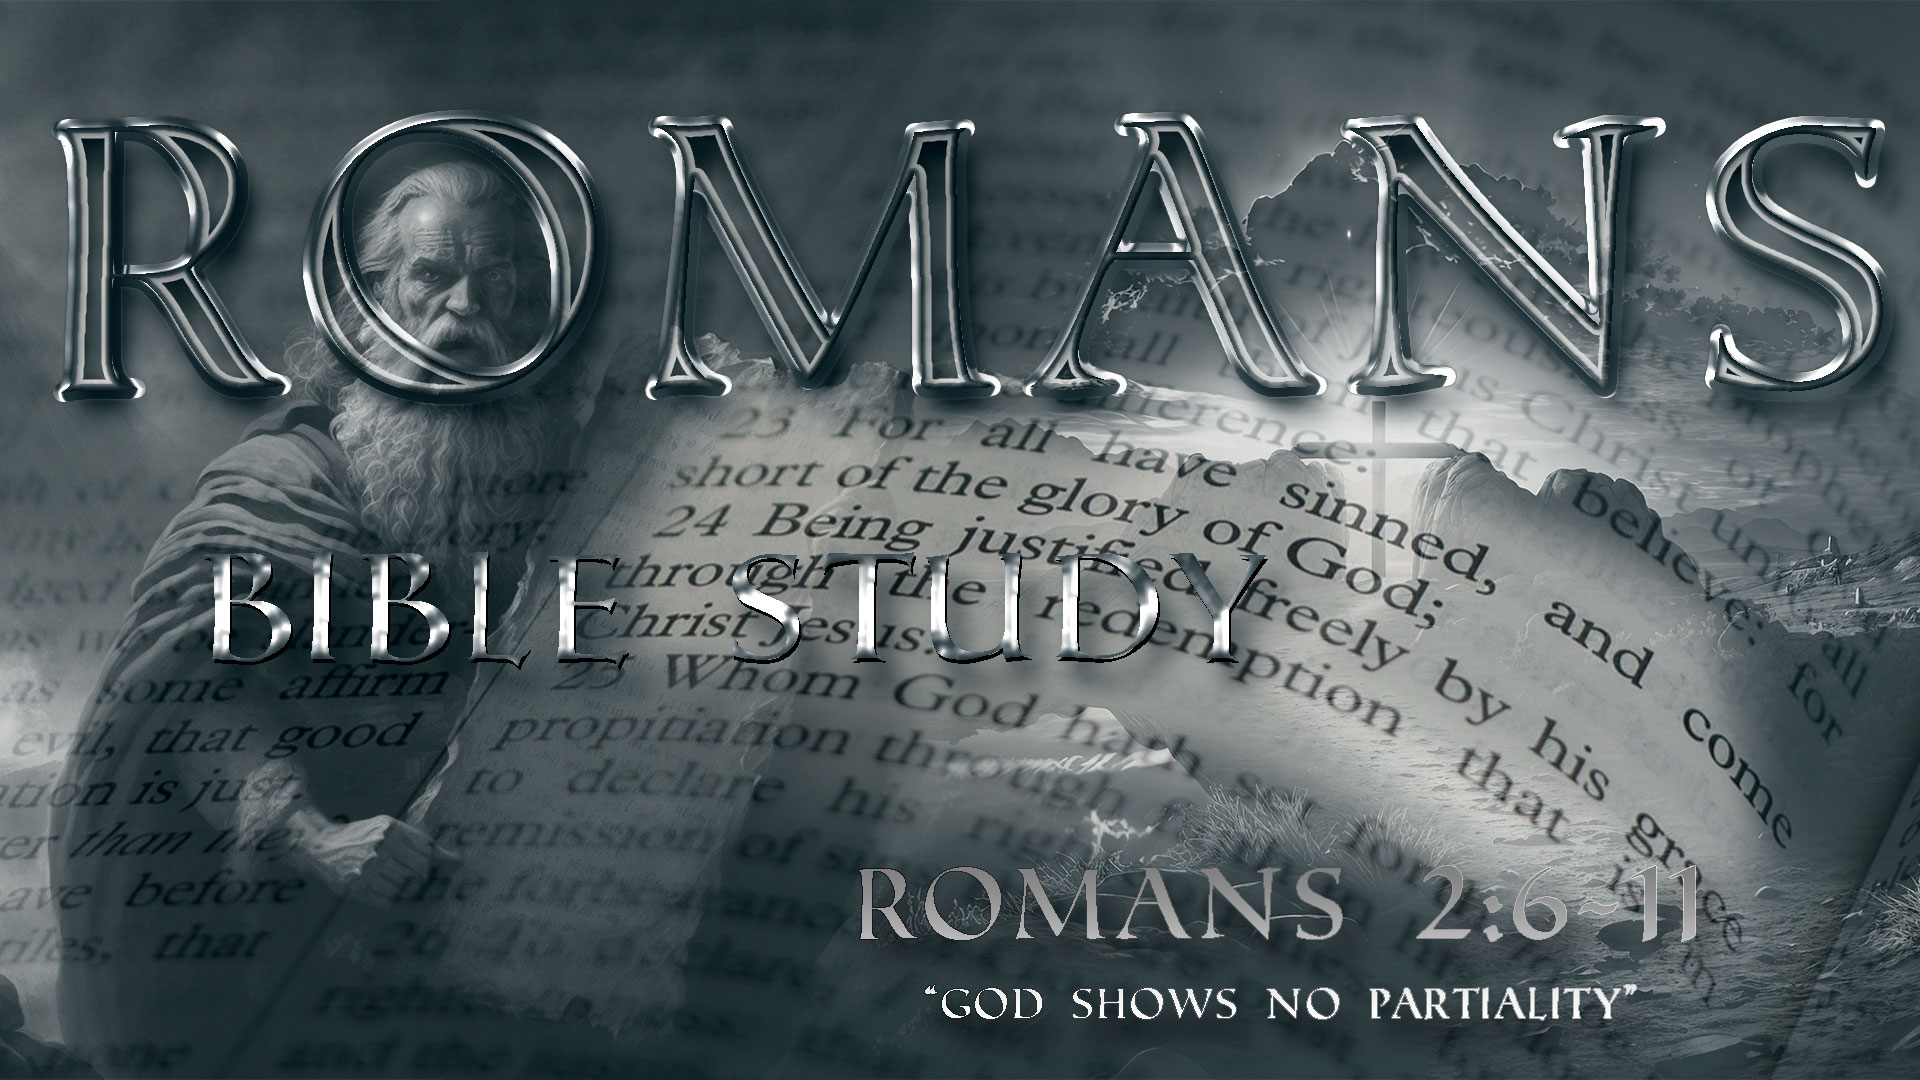 Romans 2:6-11